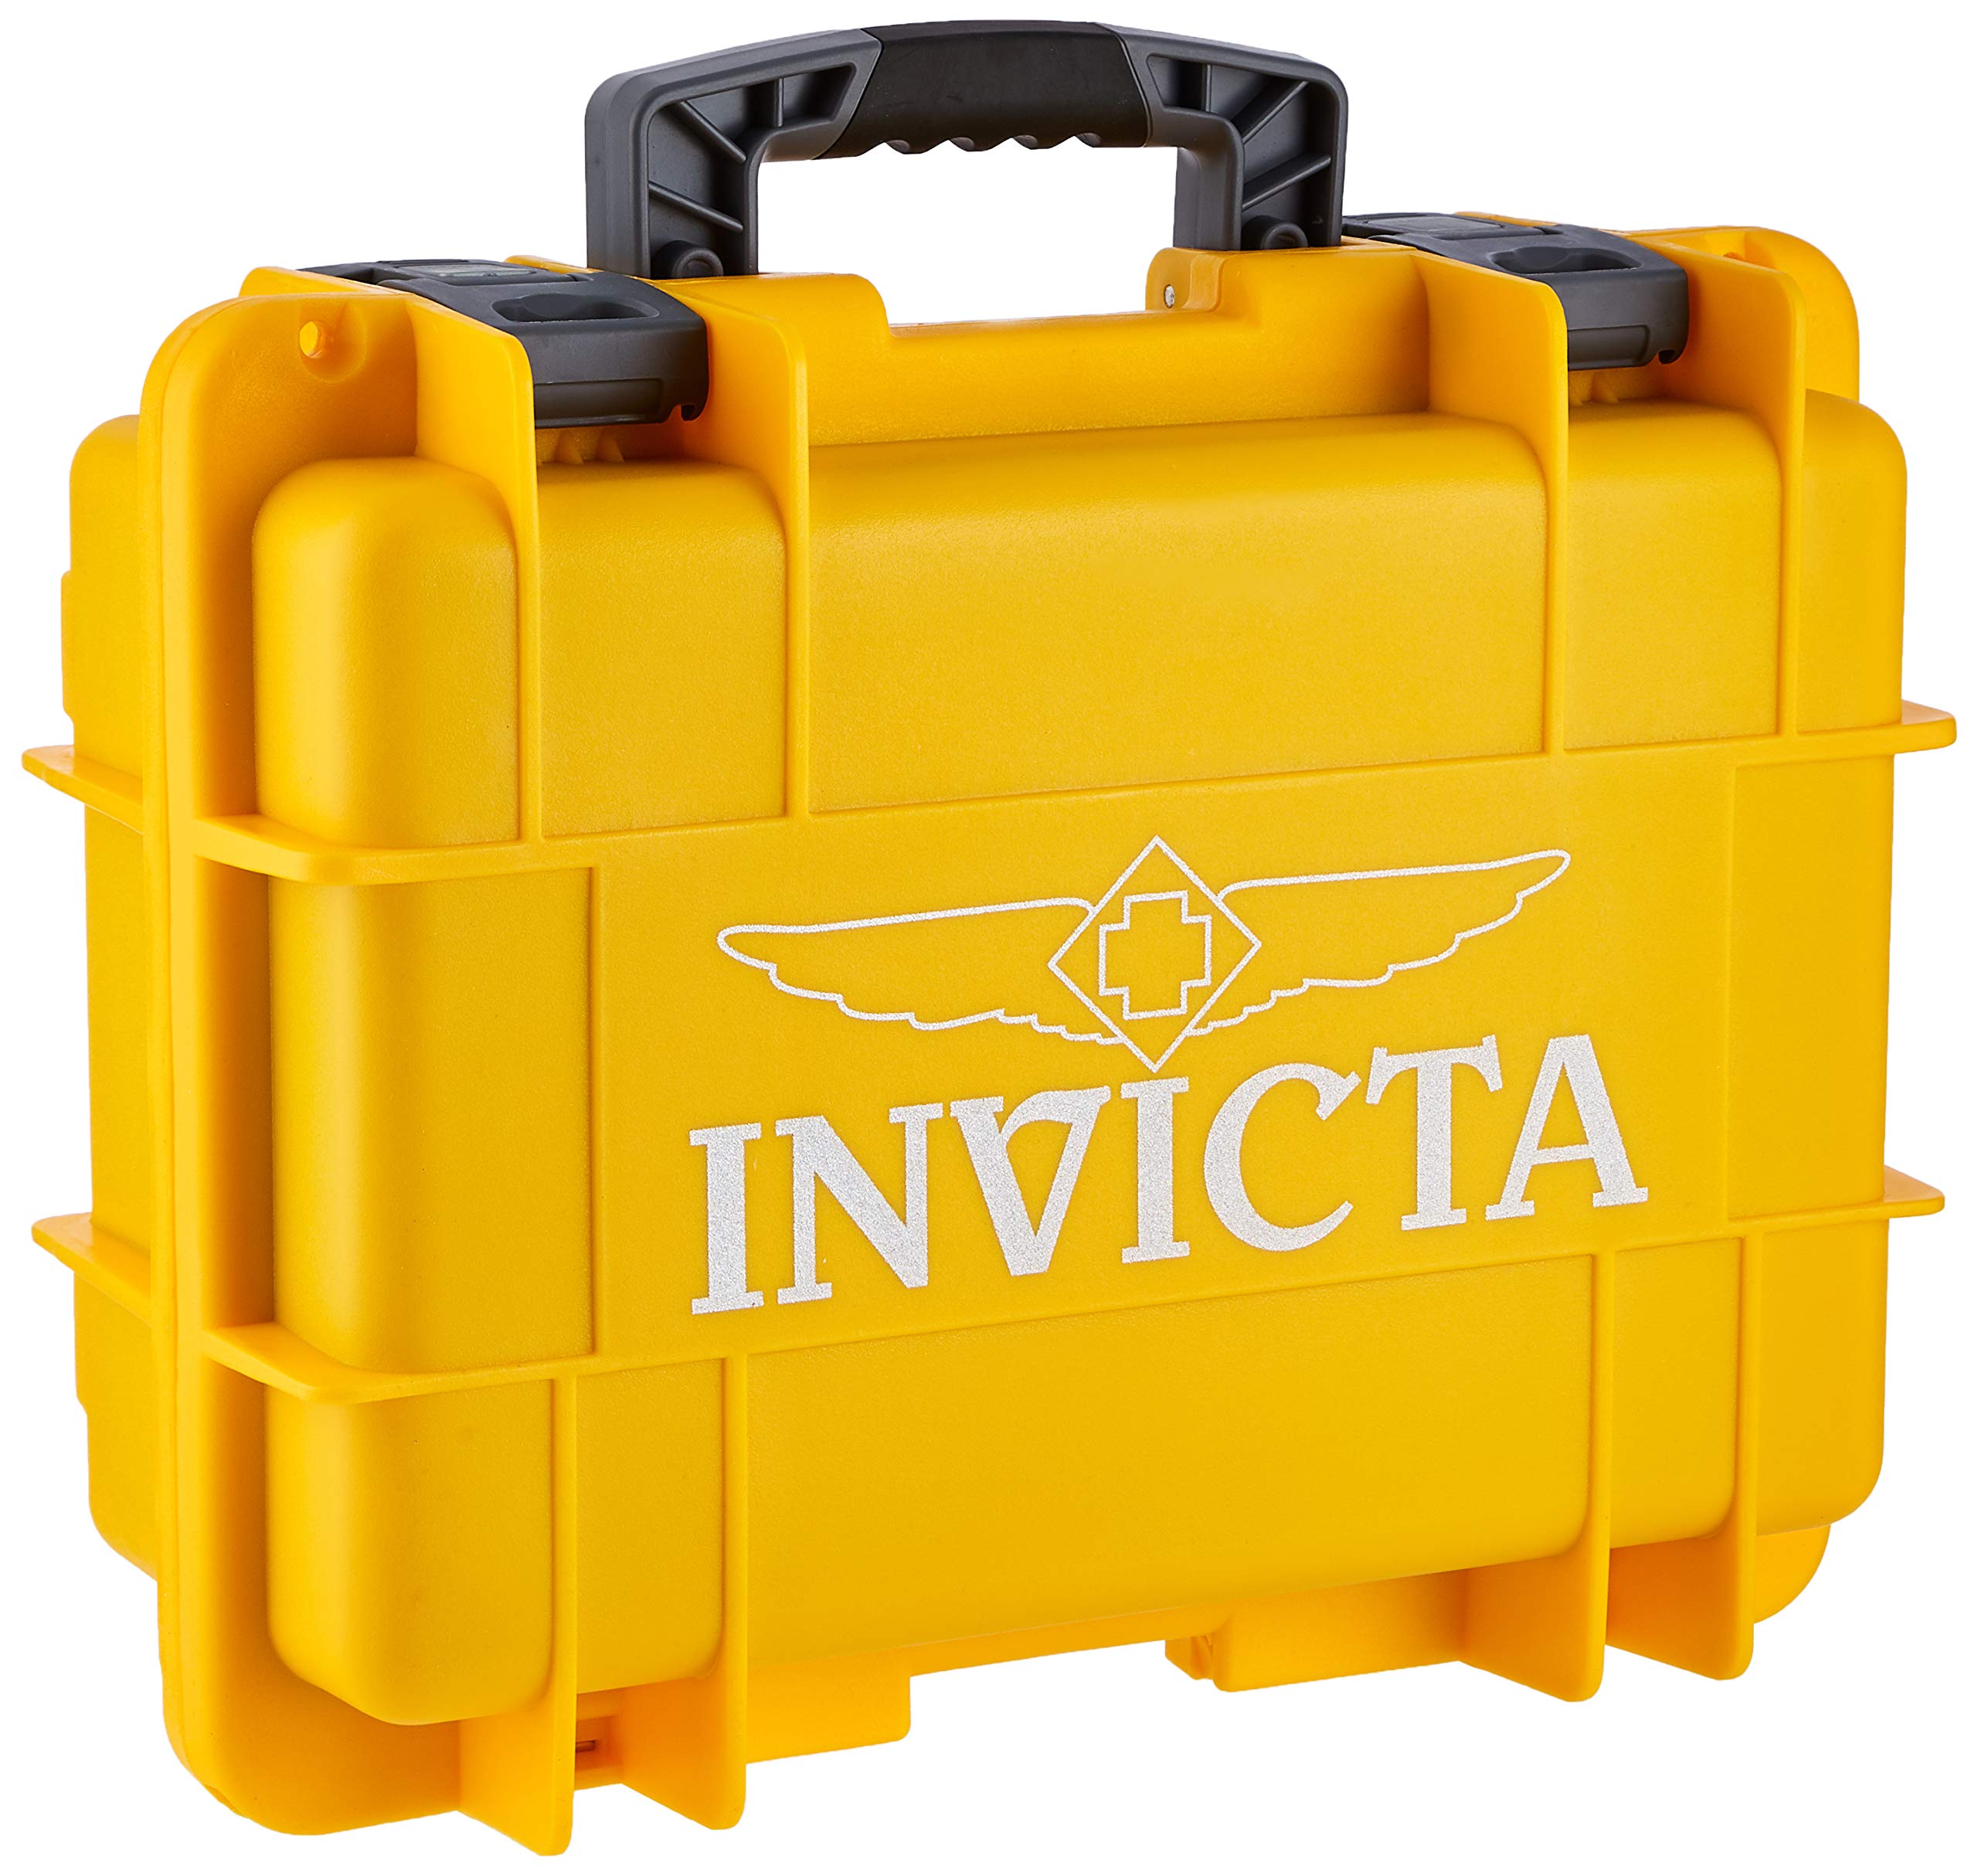 Invicta Watch Box DC8YEL, Strap